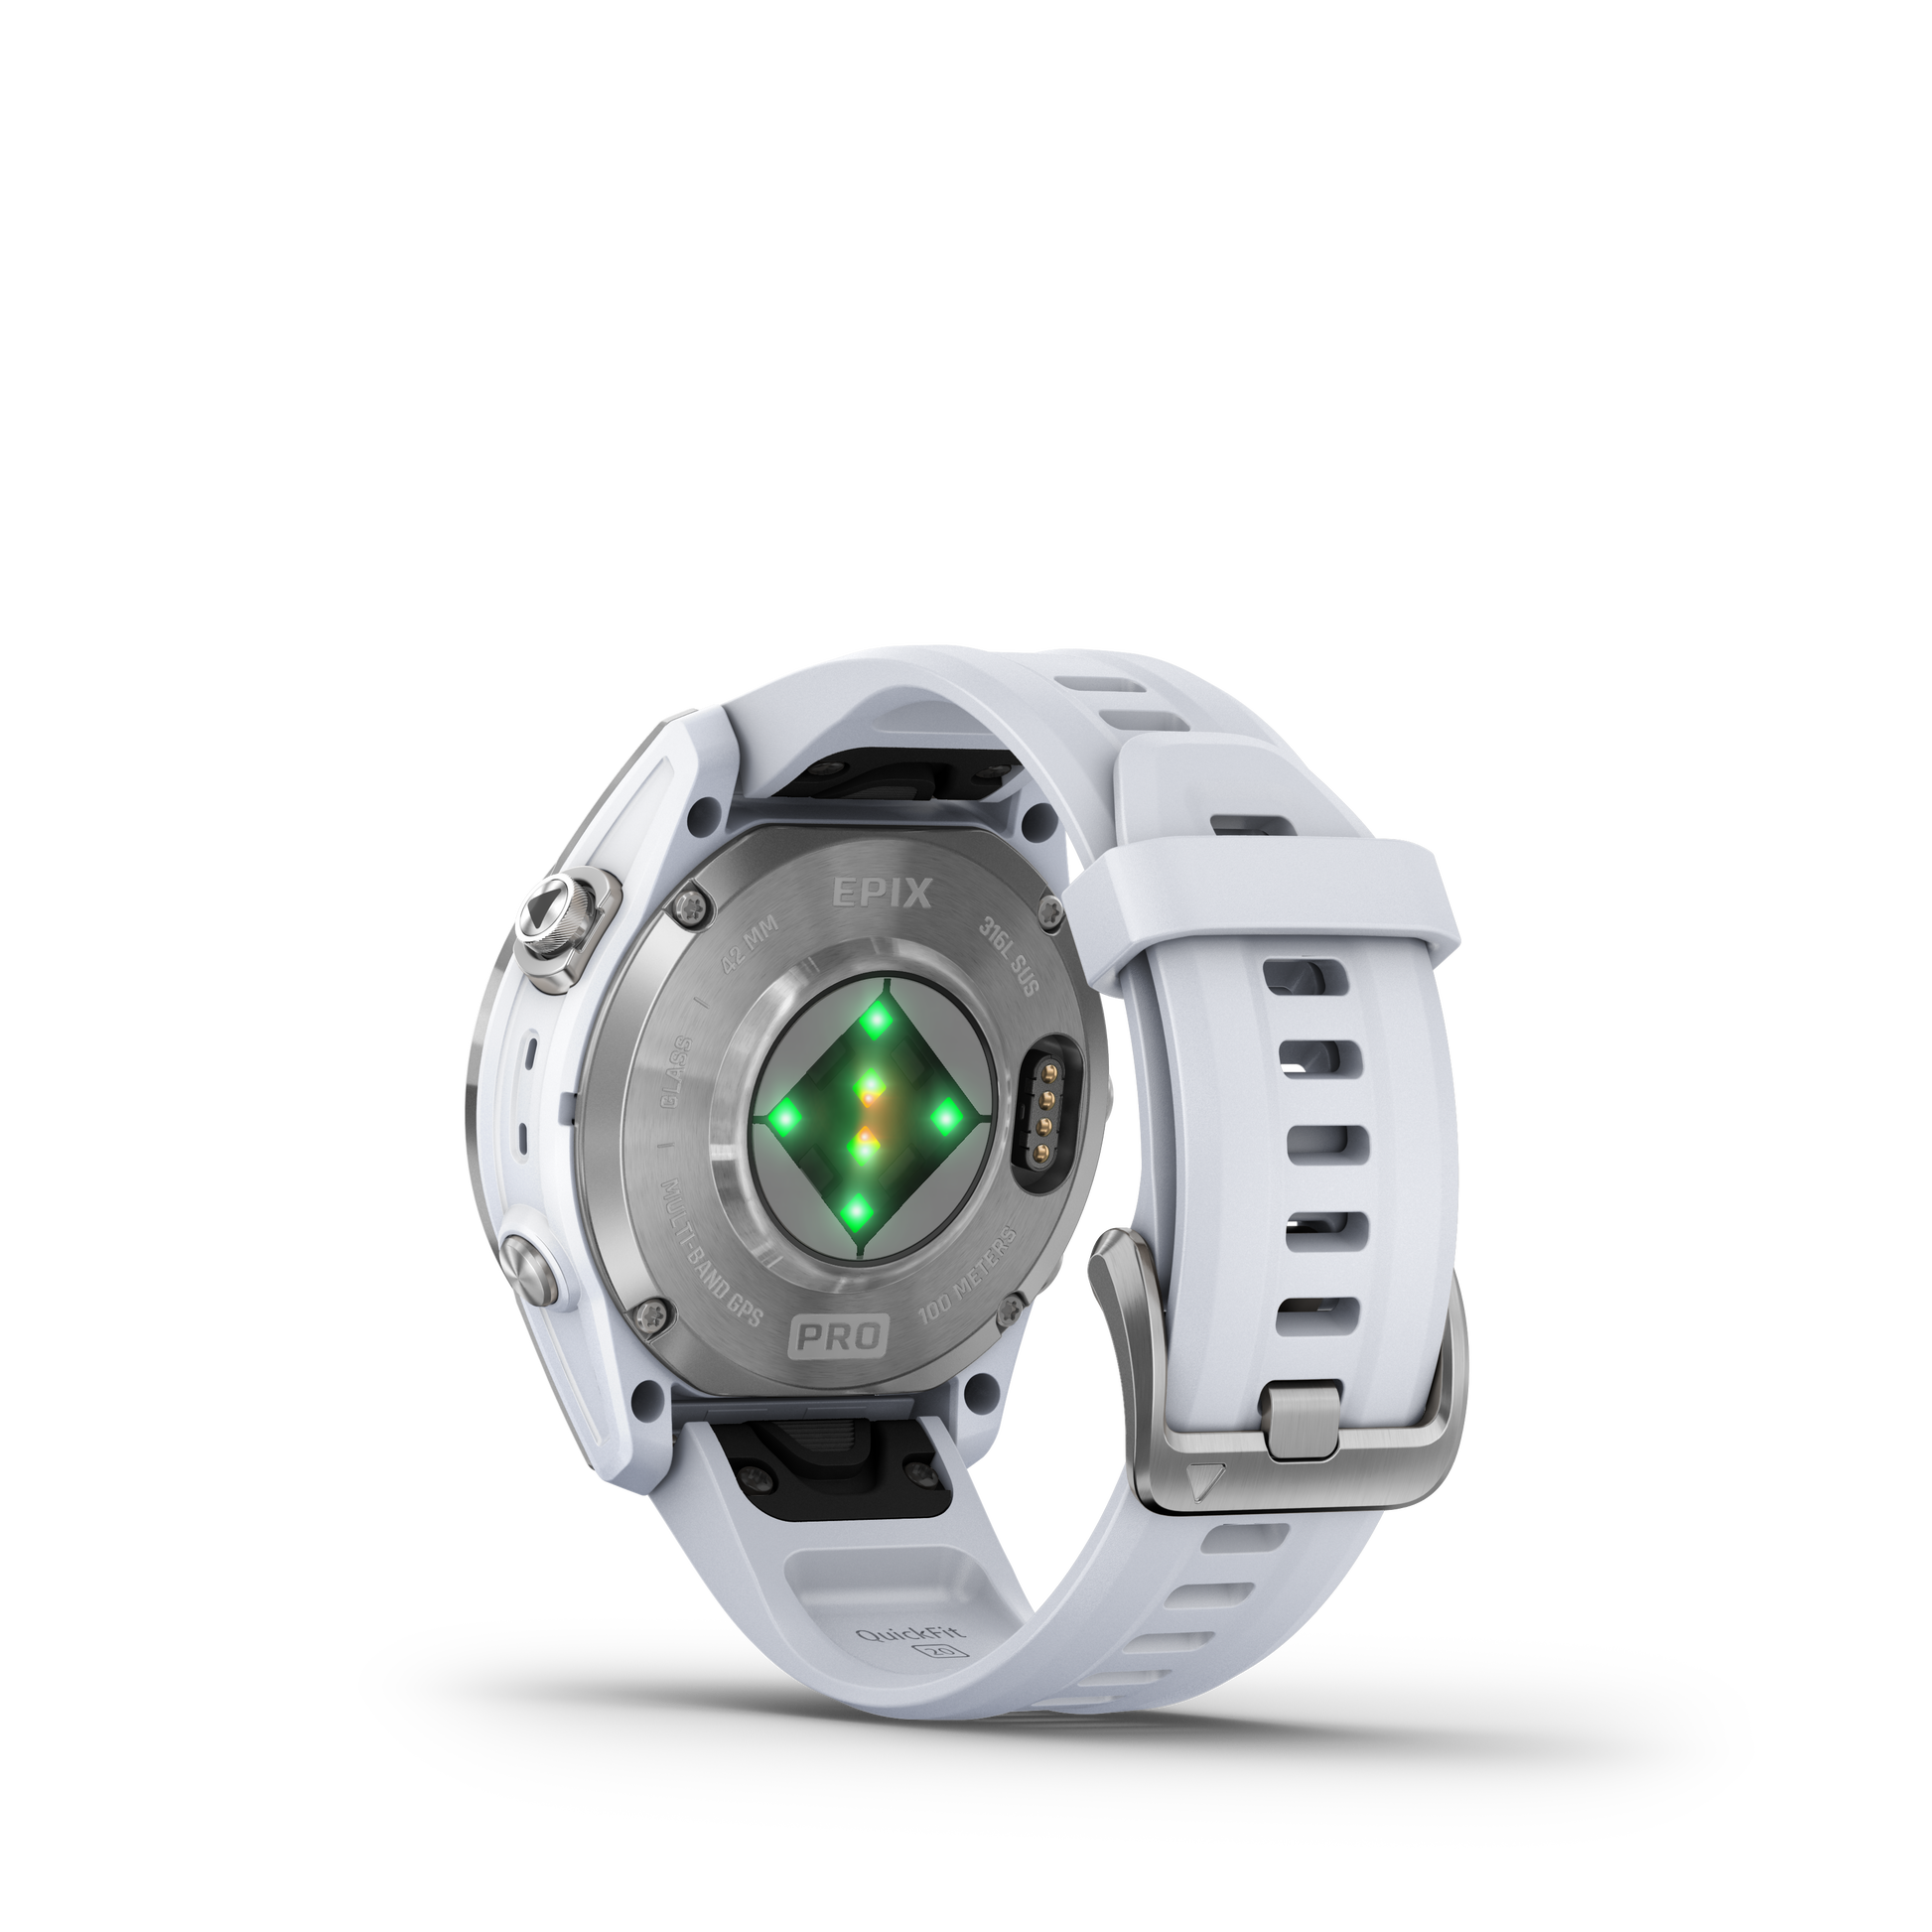 Garmin epix Gen 2, Premium Active smartwatch, Health and Wellness Features,  Touchscreen AMOLED Display, Adventure Watch with Advanced Features, Black  Titanium 